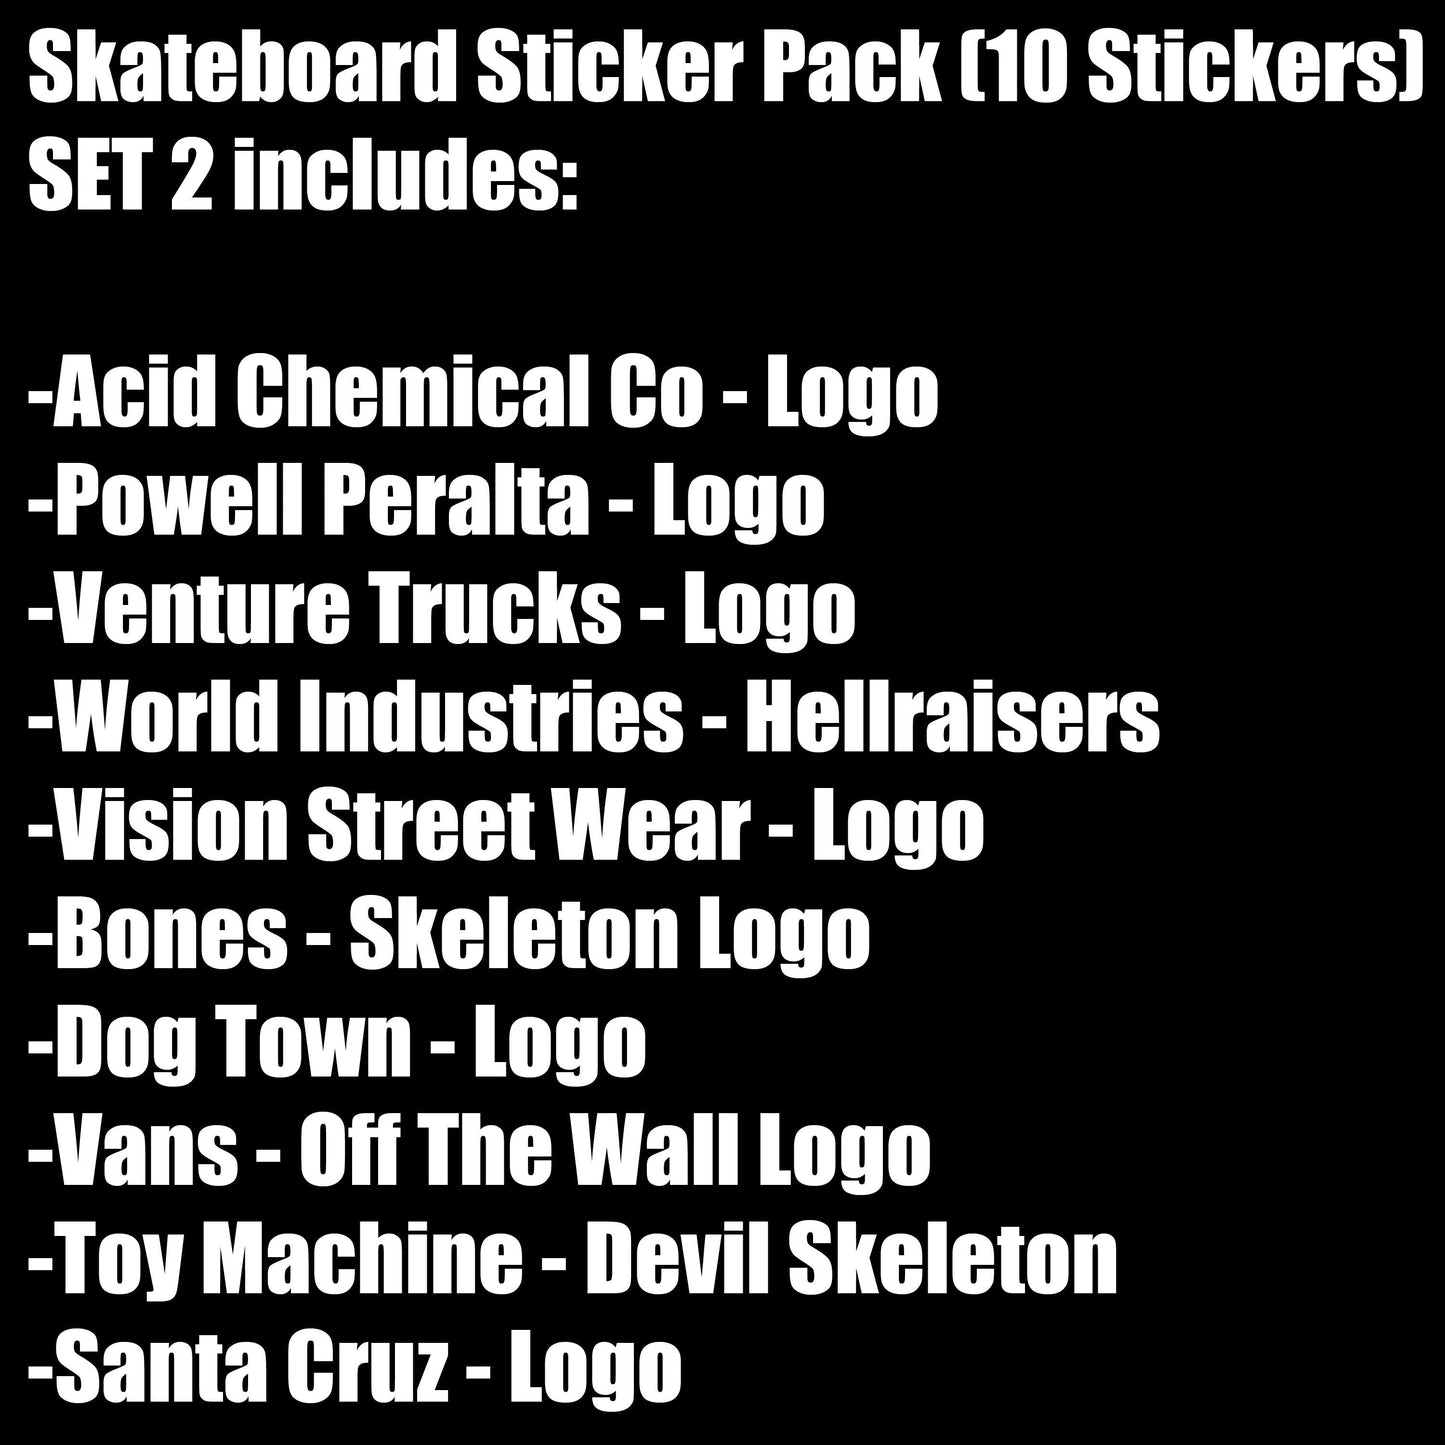 Skateboard Sticker Pack (10 Stickers) SET 2